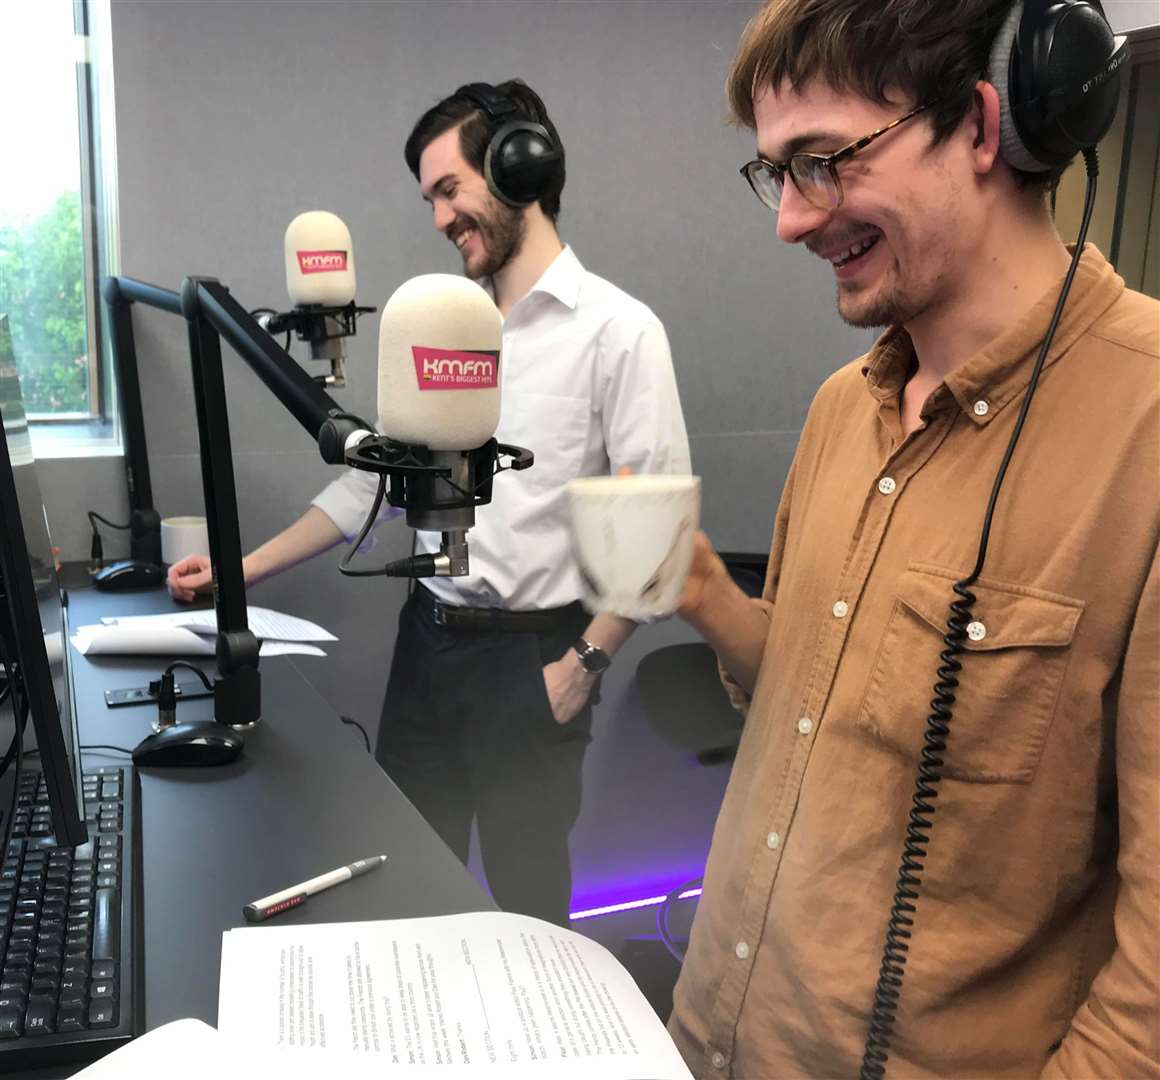 Robert Boddy and Daniel Esson recording The Kent Politics Podcast at the kmfm studio